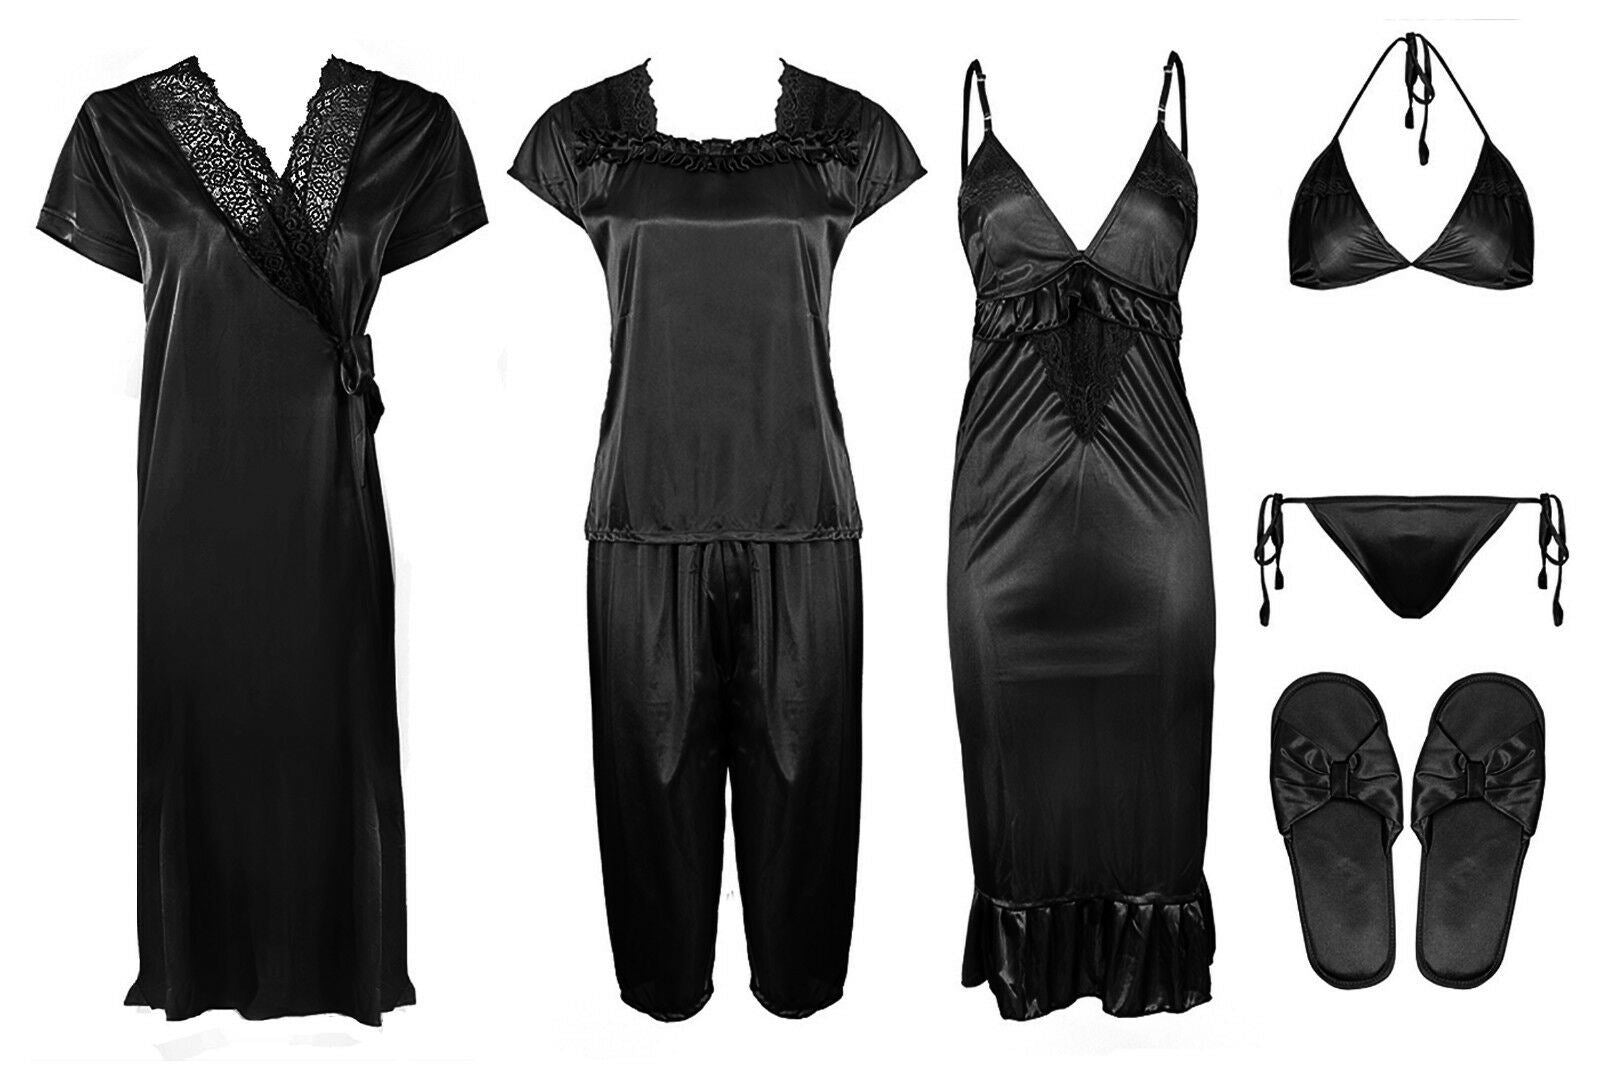 Black 1 / One Size Ladies Satin Nightwear Set / Pyjama Set The Orange Tags